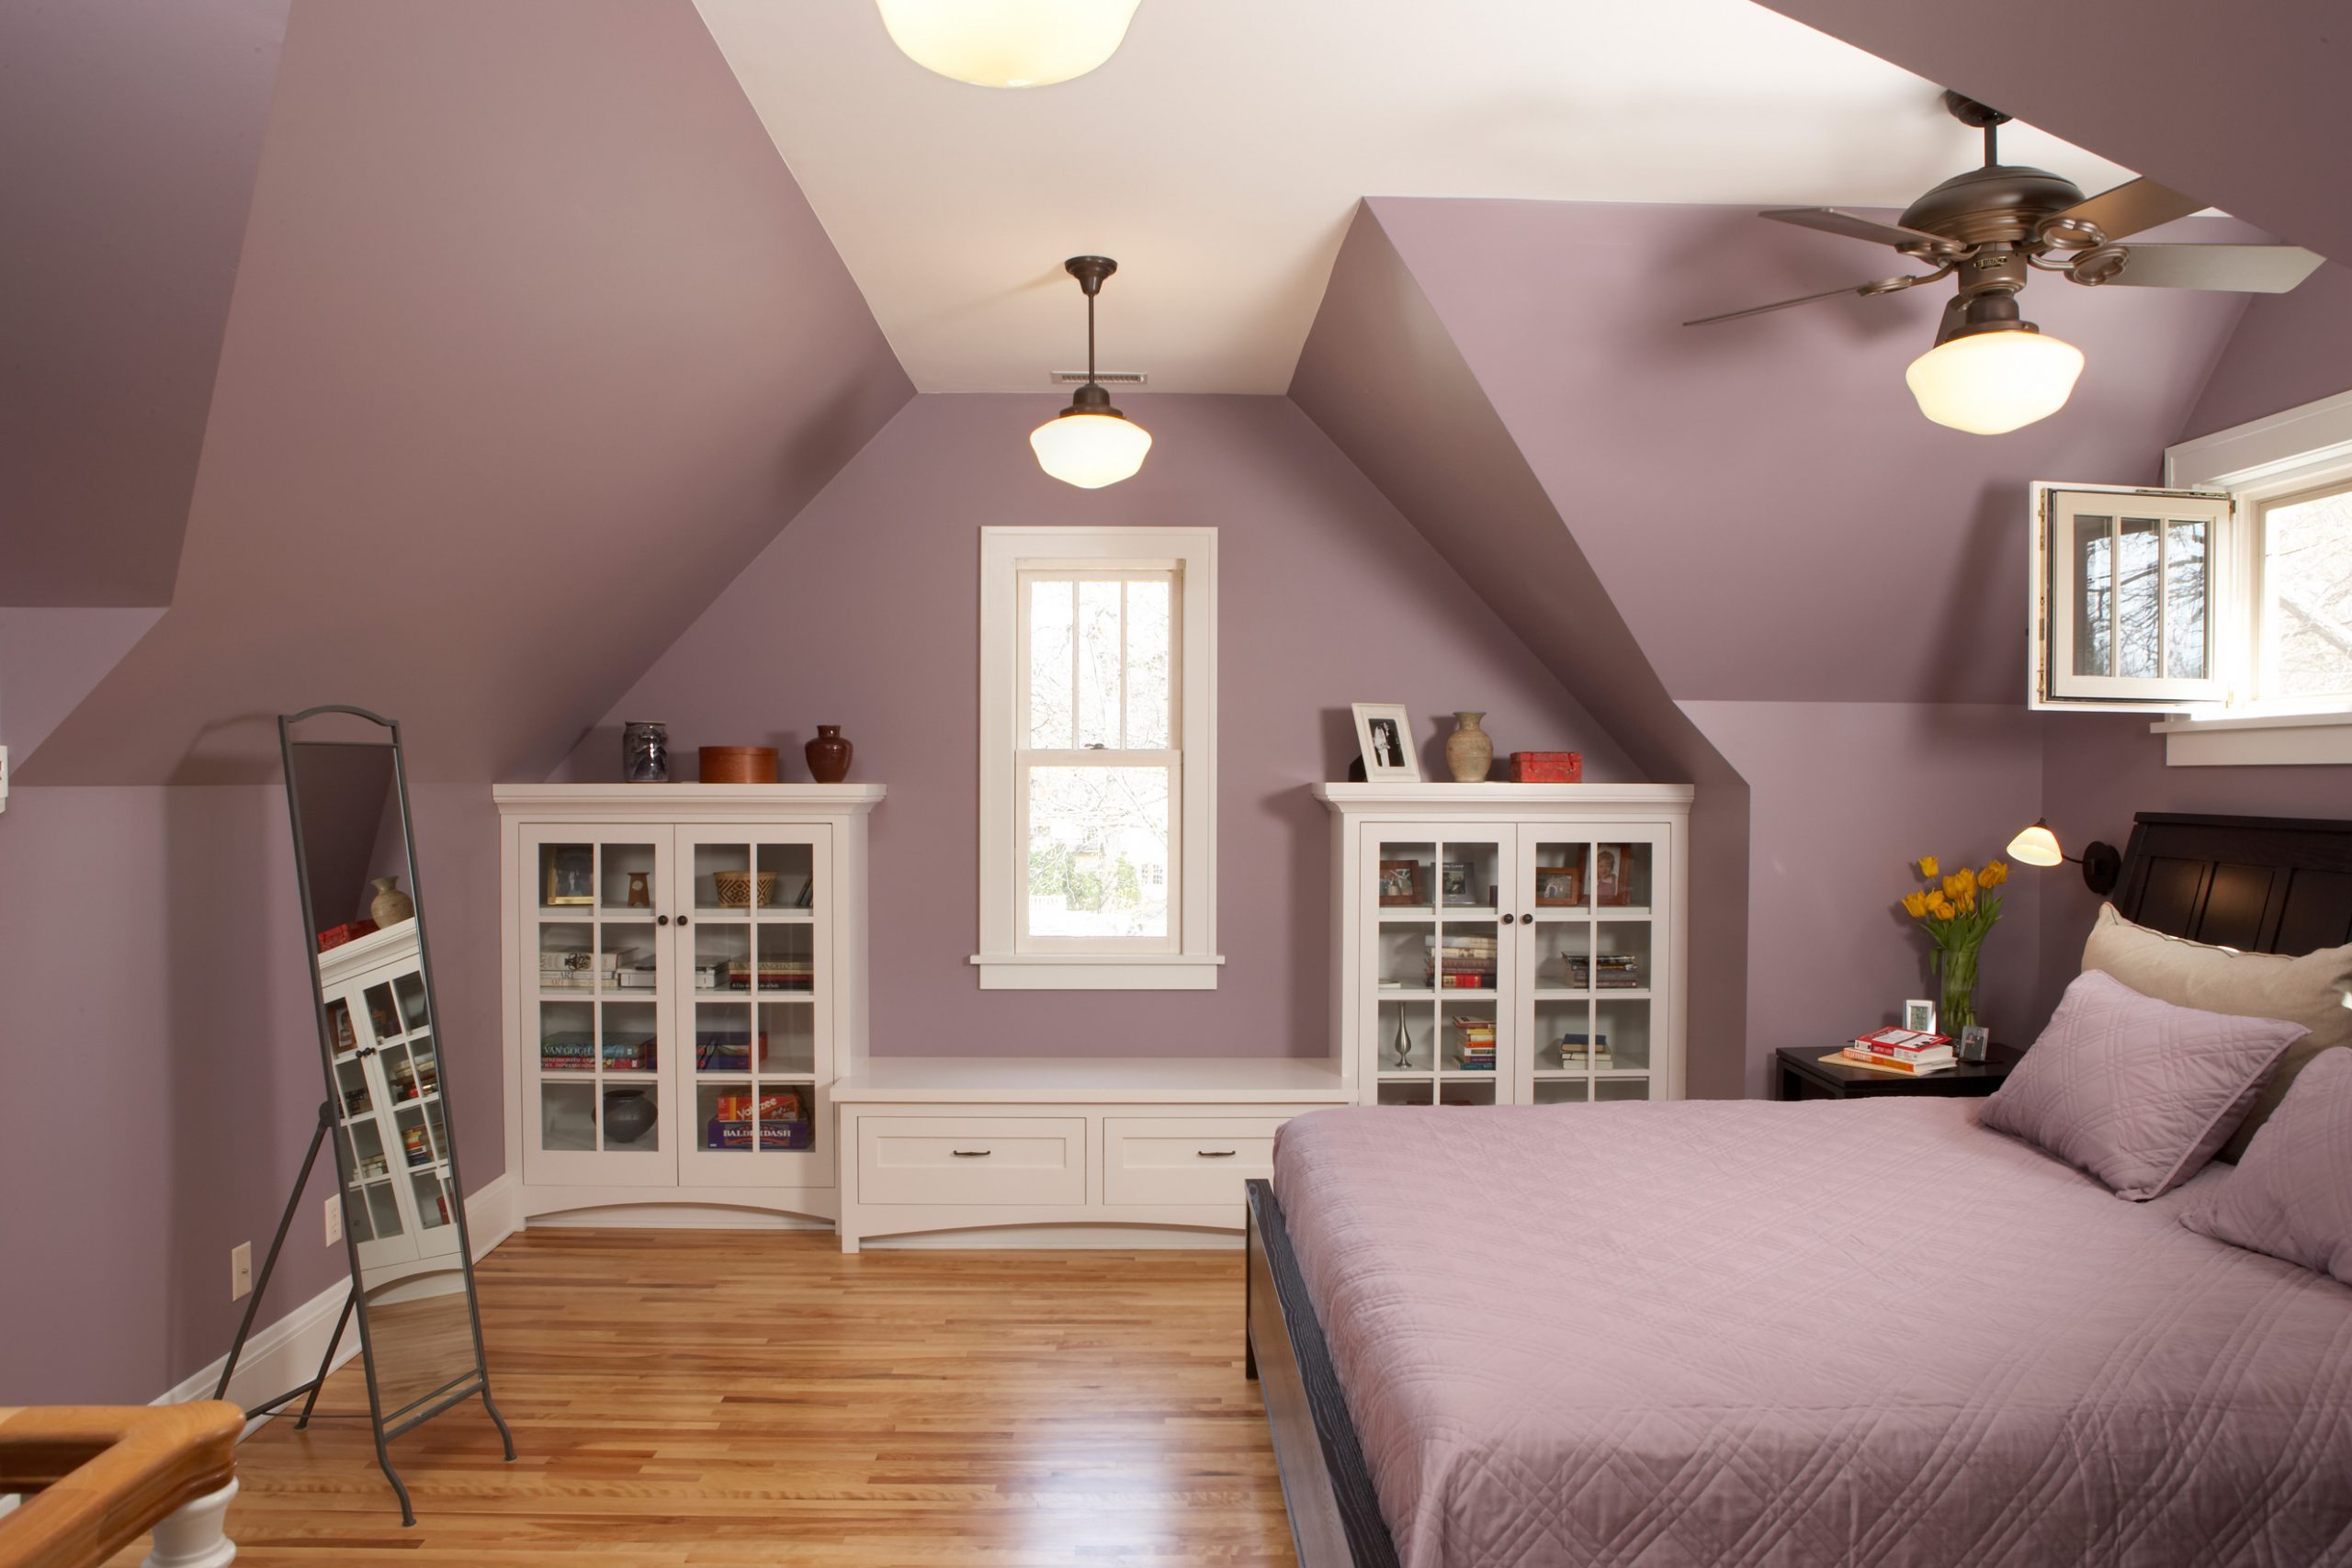 Charming Minneapolis attic design purple bedroom with white cabinets